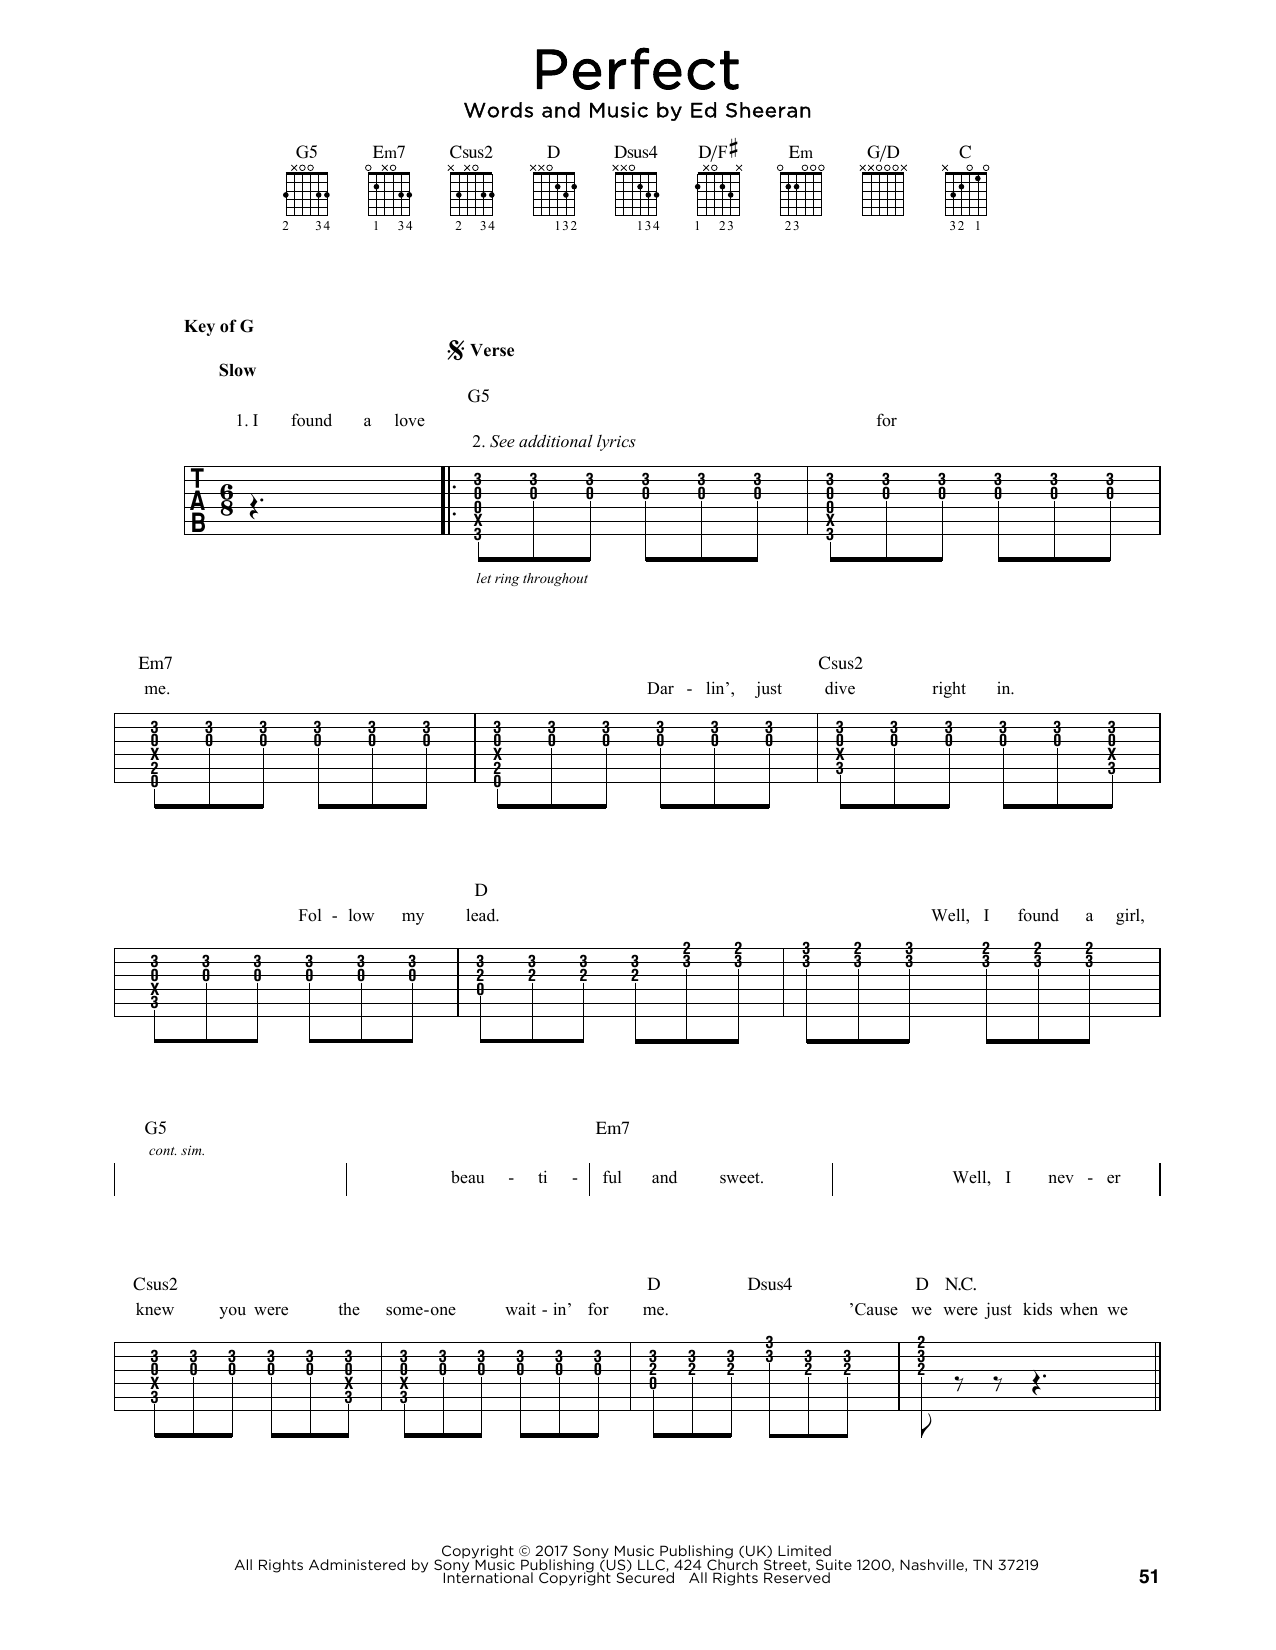 Ed Sheeran Perfect Sheet Music Notes & Chords for Guitar Tab - Download or Print PDF